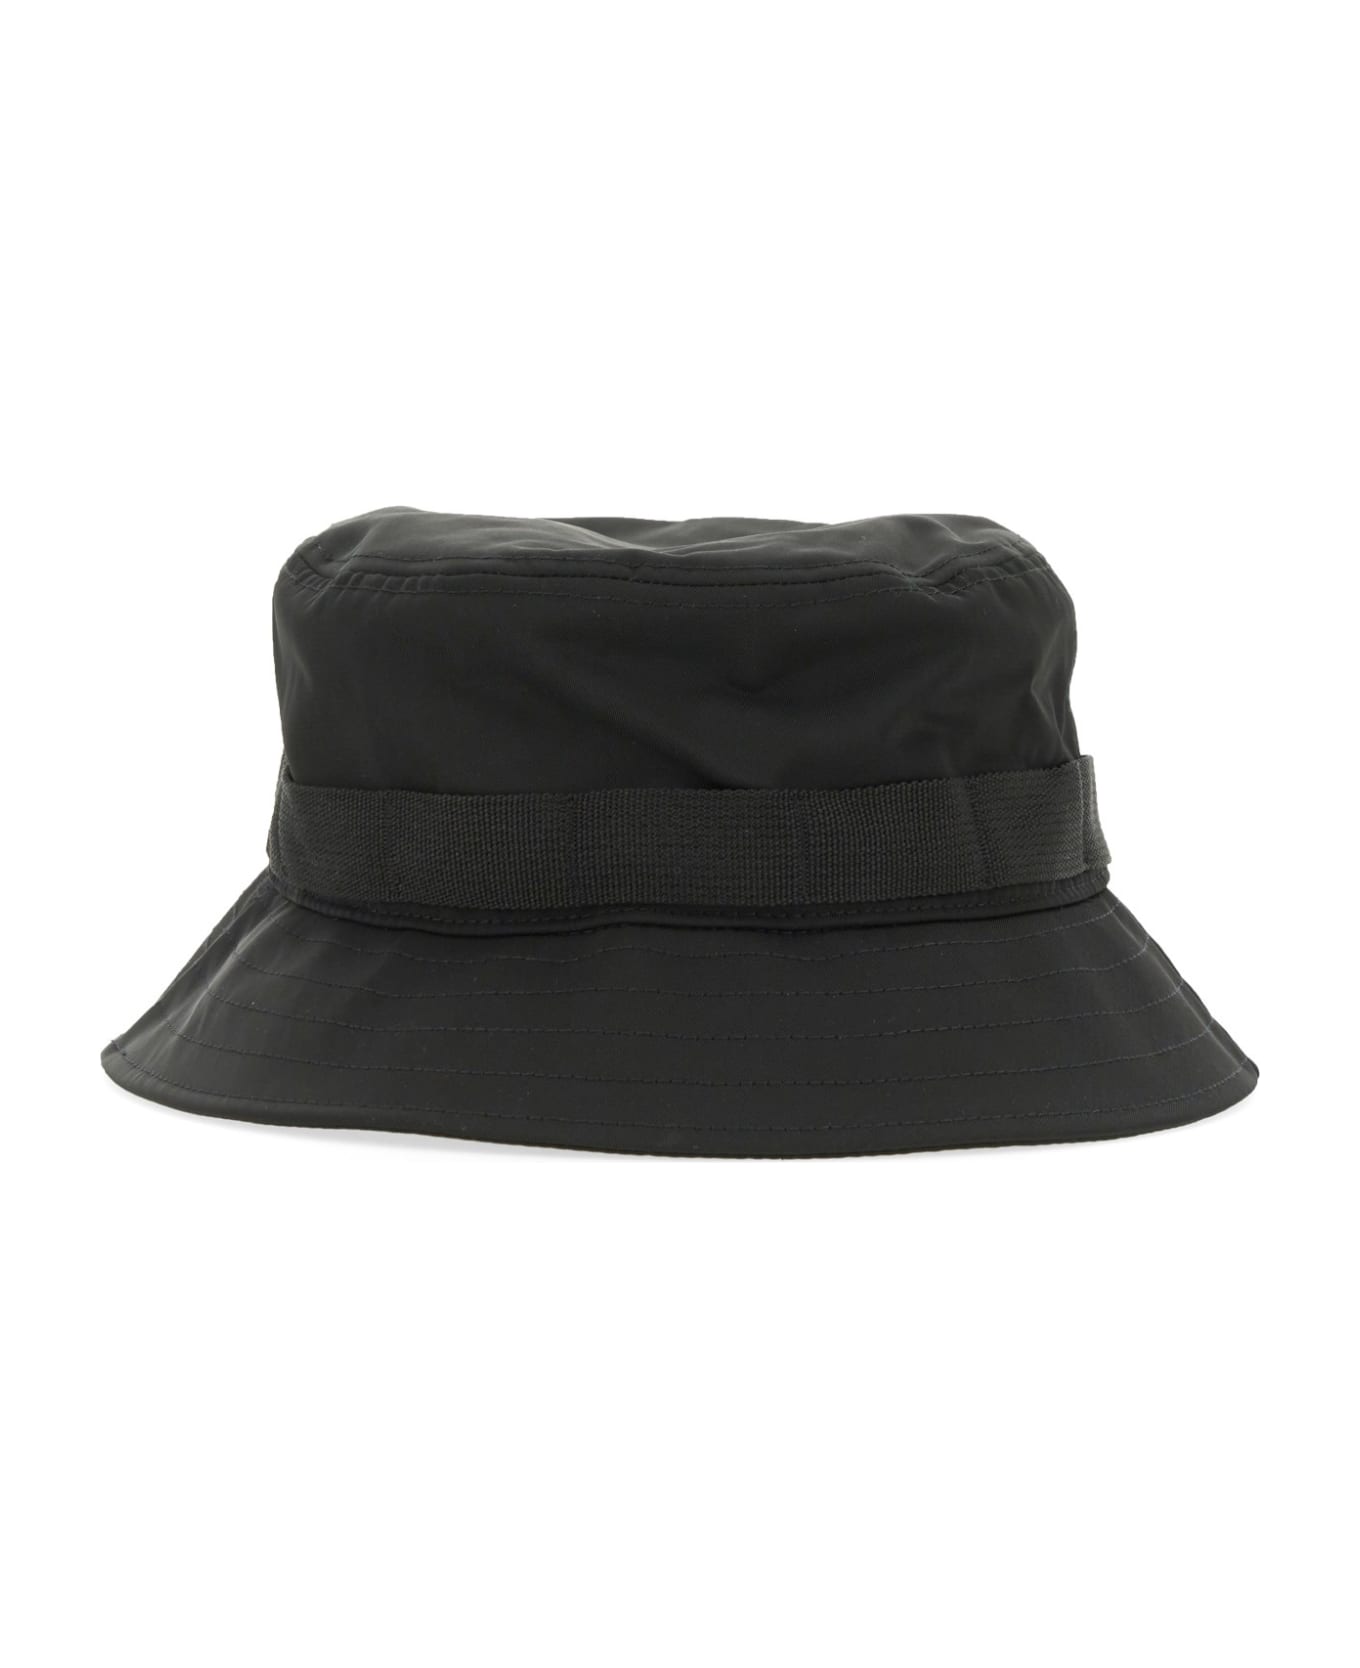 Kenzo Bucket Hat With Logo - NERO 帽子